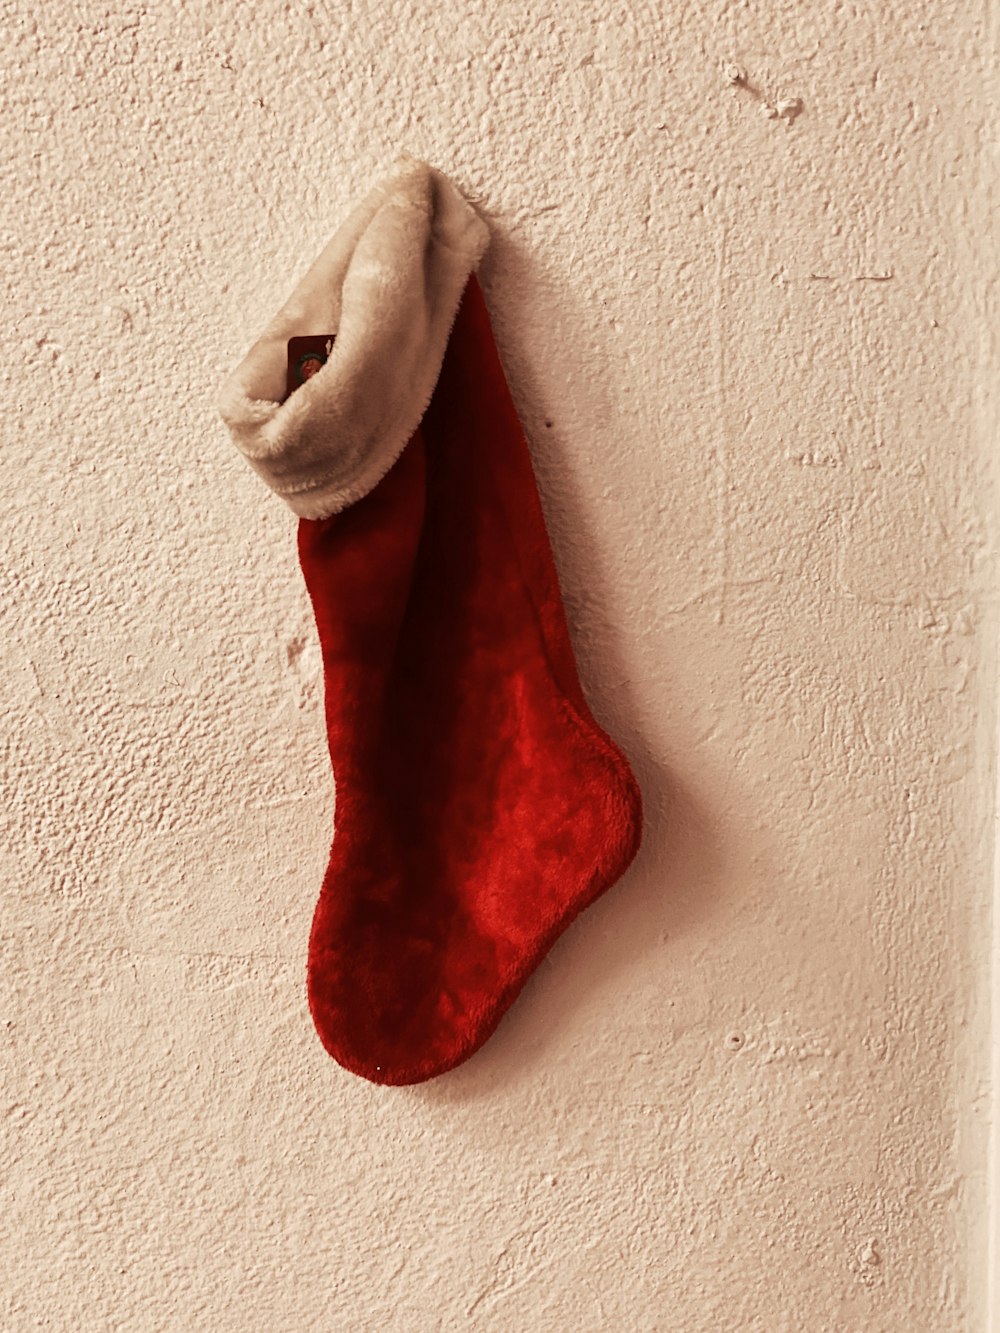 red Christmas stocking